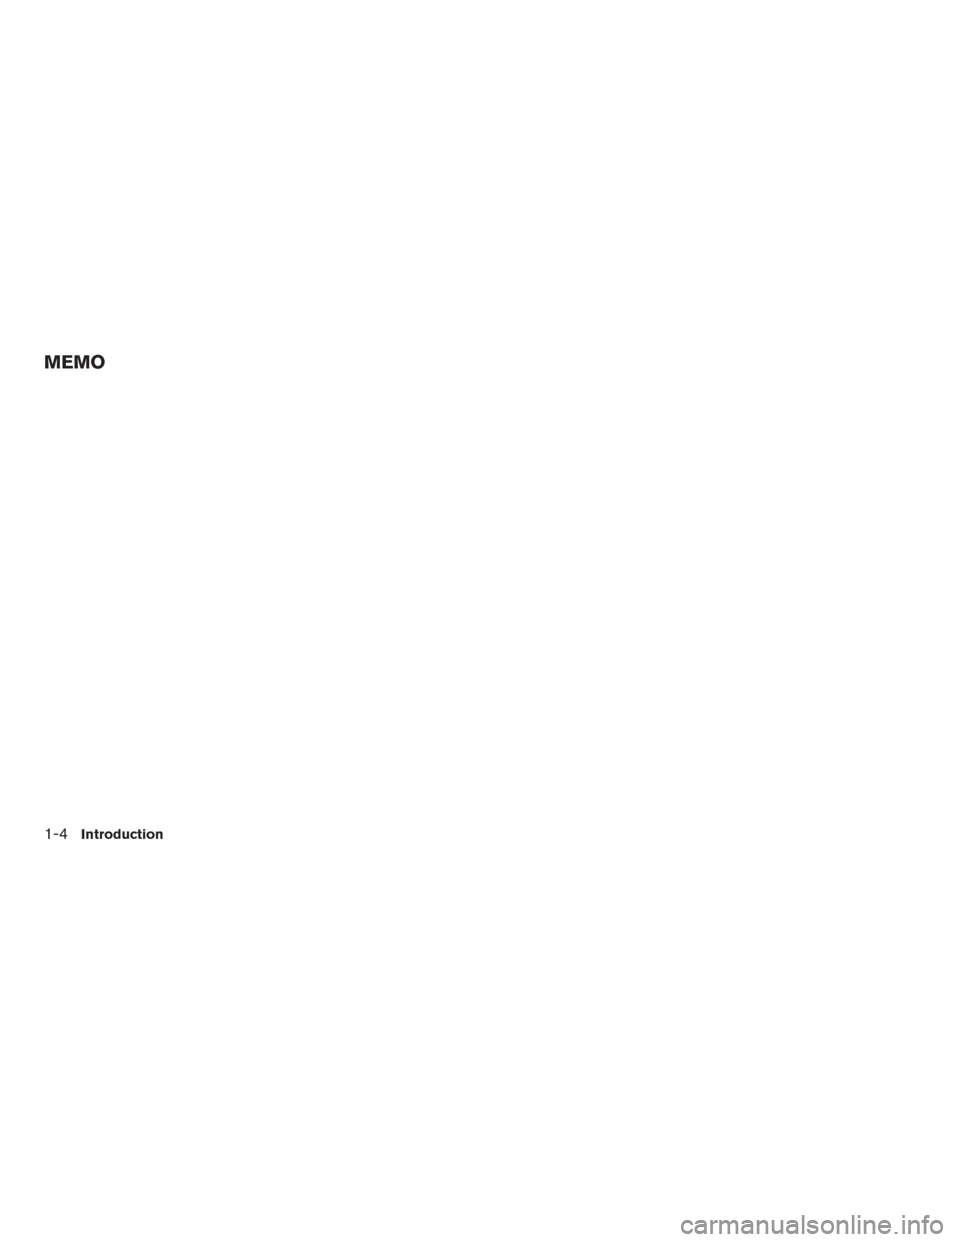 NISSAN JUKE 2014 F15 / 1.G LC1 Navigation Manual 1-4Introduction
MEMO 